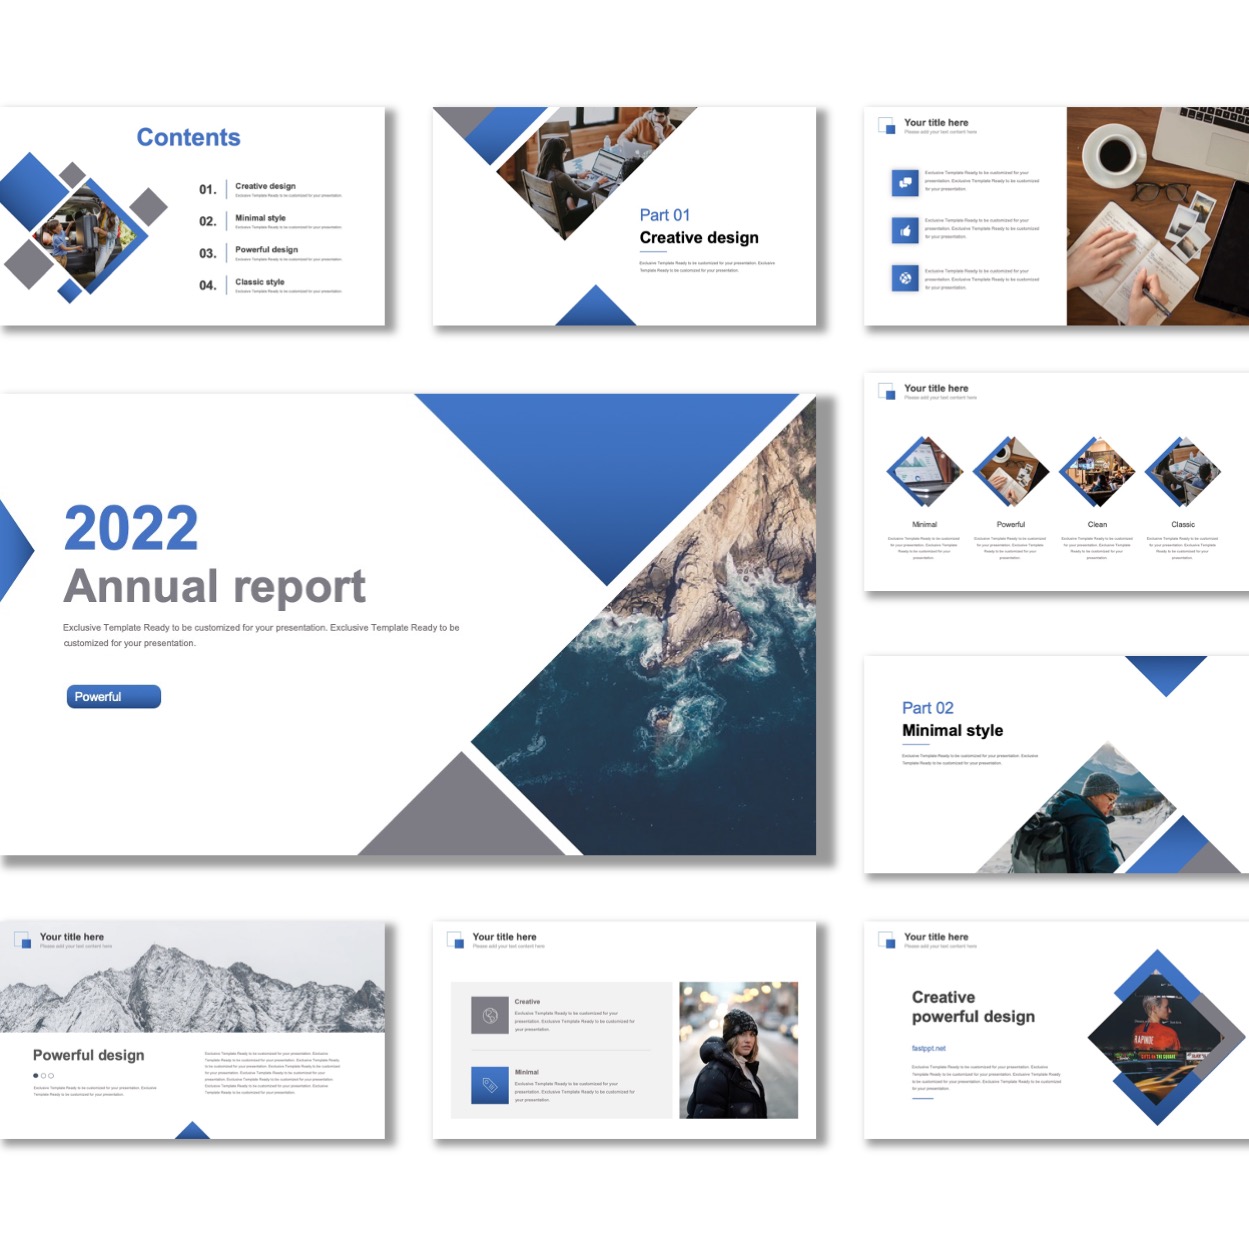 2022 annual report design